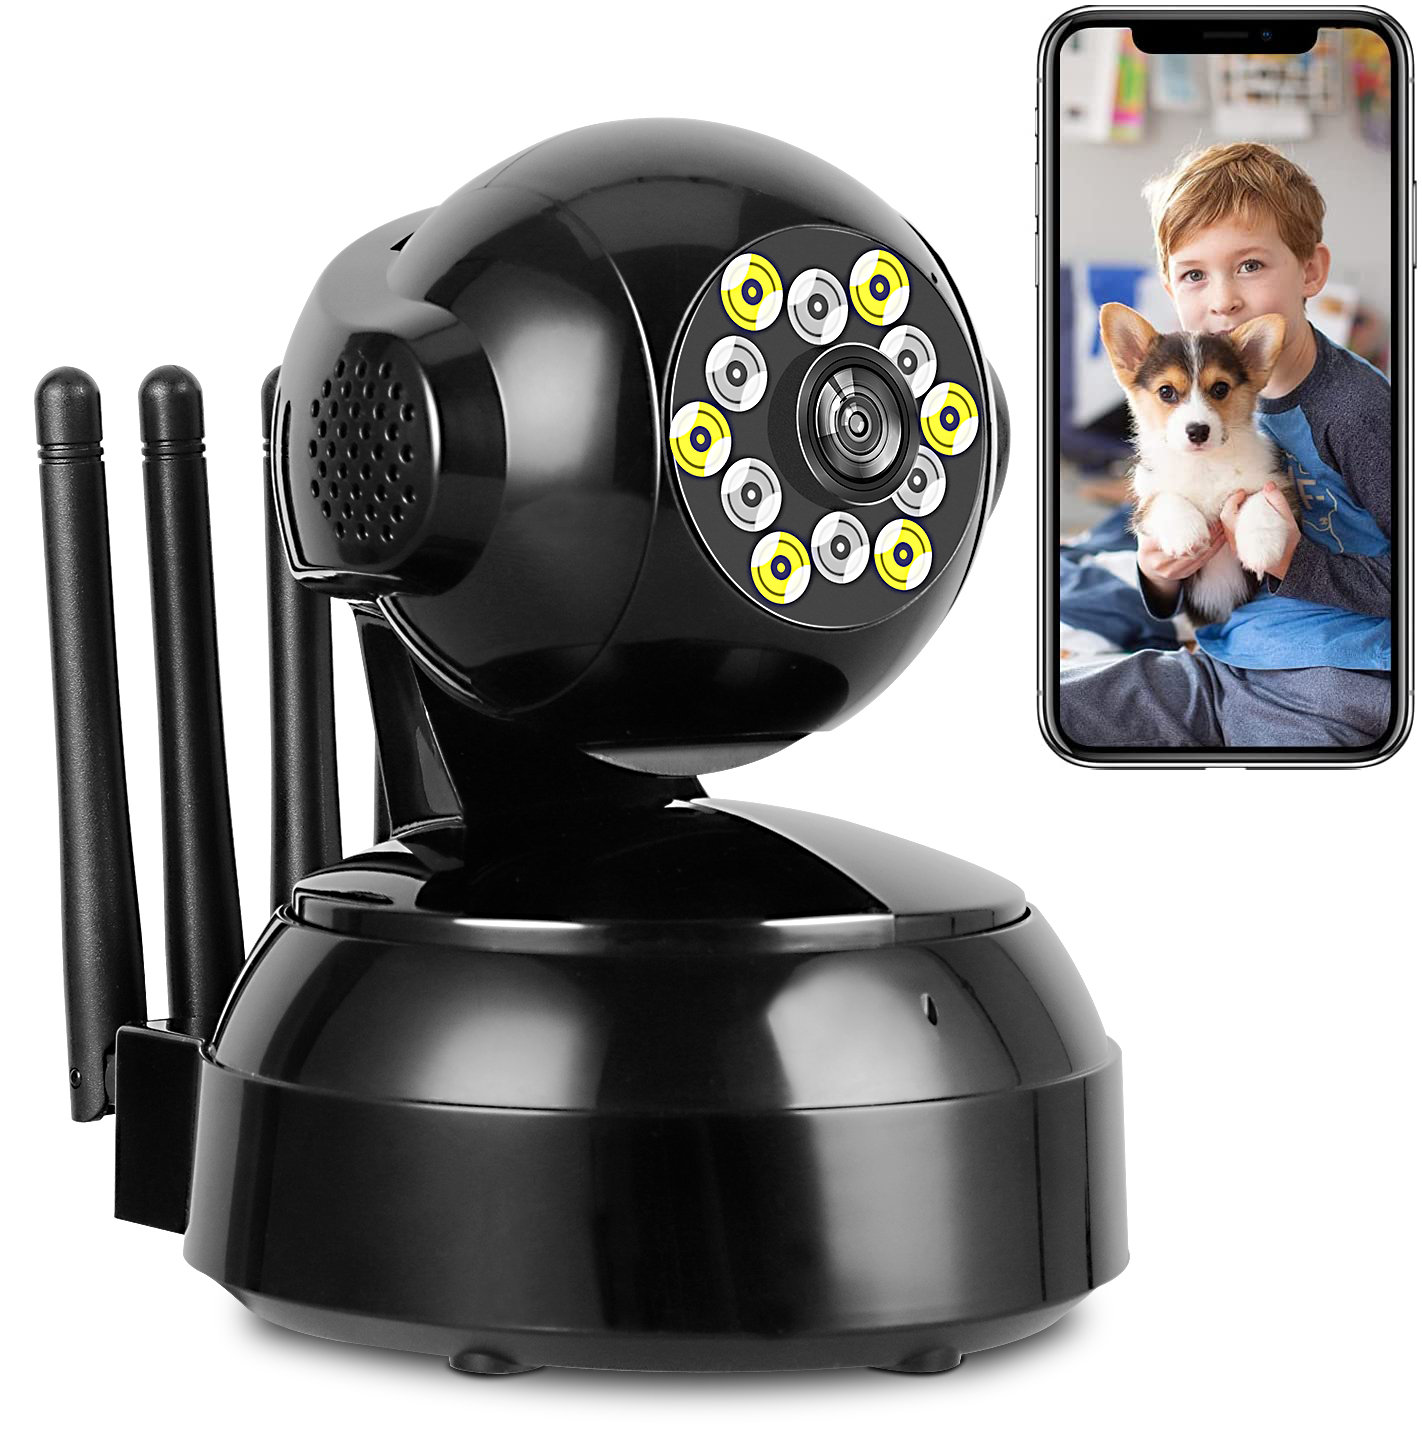 Cámara de vigilancia WiFi Cámara IP 1080P WiFi Smart Home Cámara interior  para bebé/mascota/niñera, conversación de 2 vías, visión nocturna,  detección